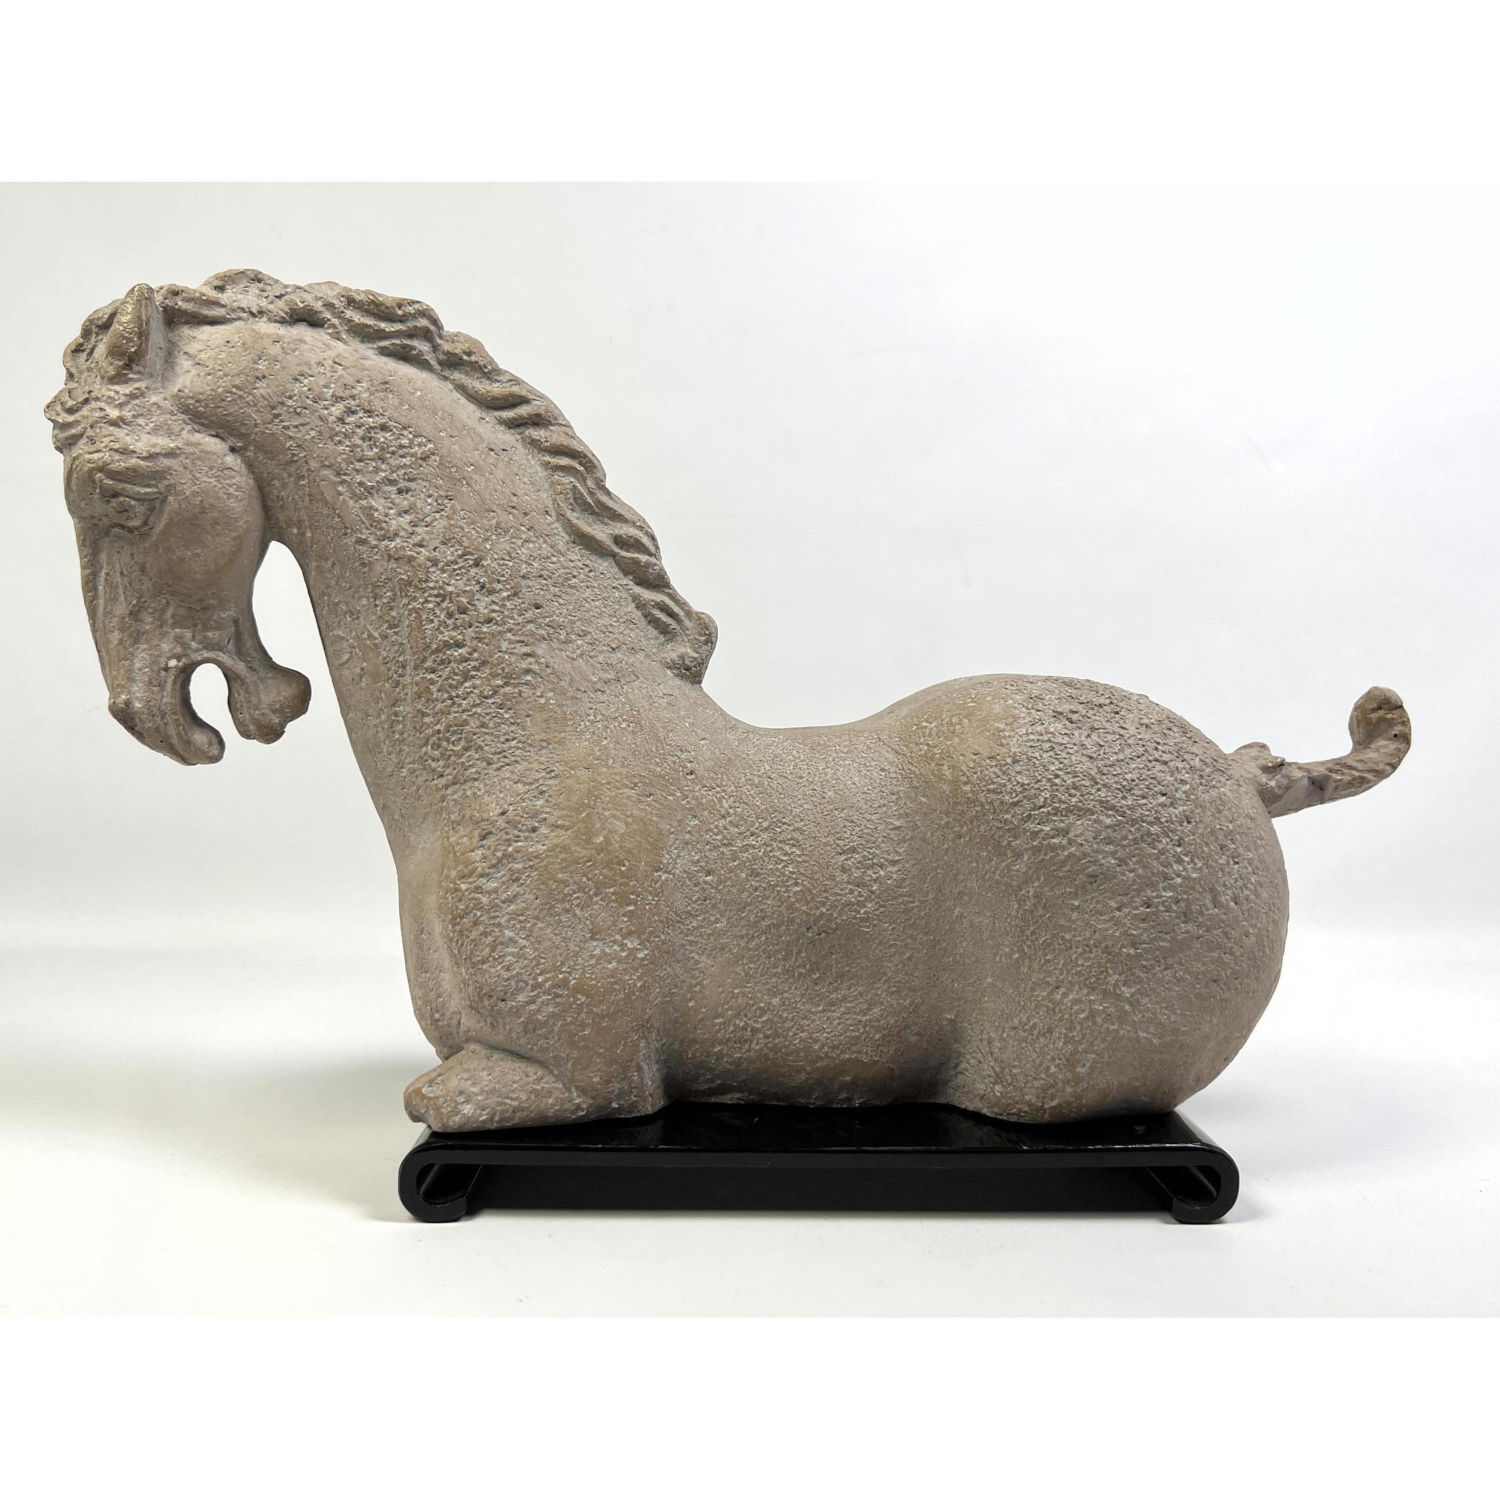 AUSTIN PRODUCTS Resin Horse Sculpture  2b9b4d